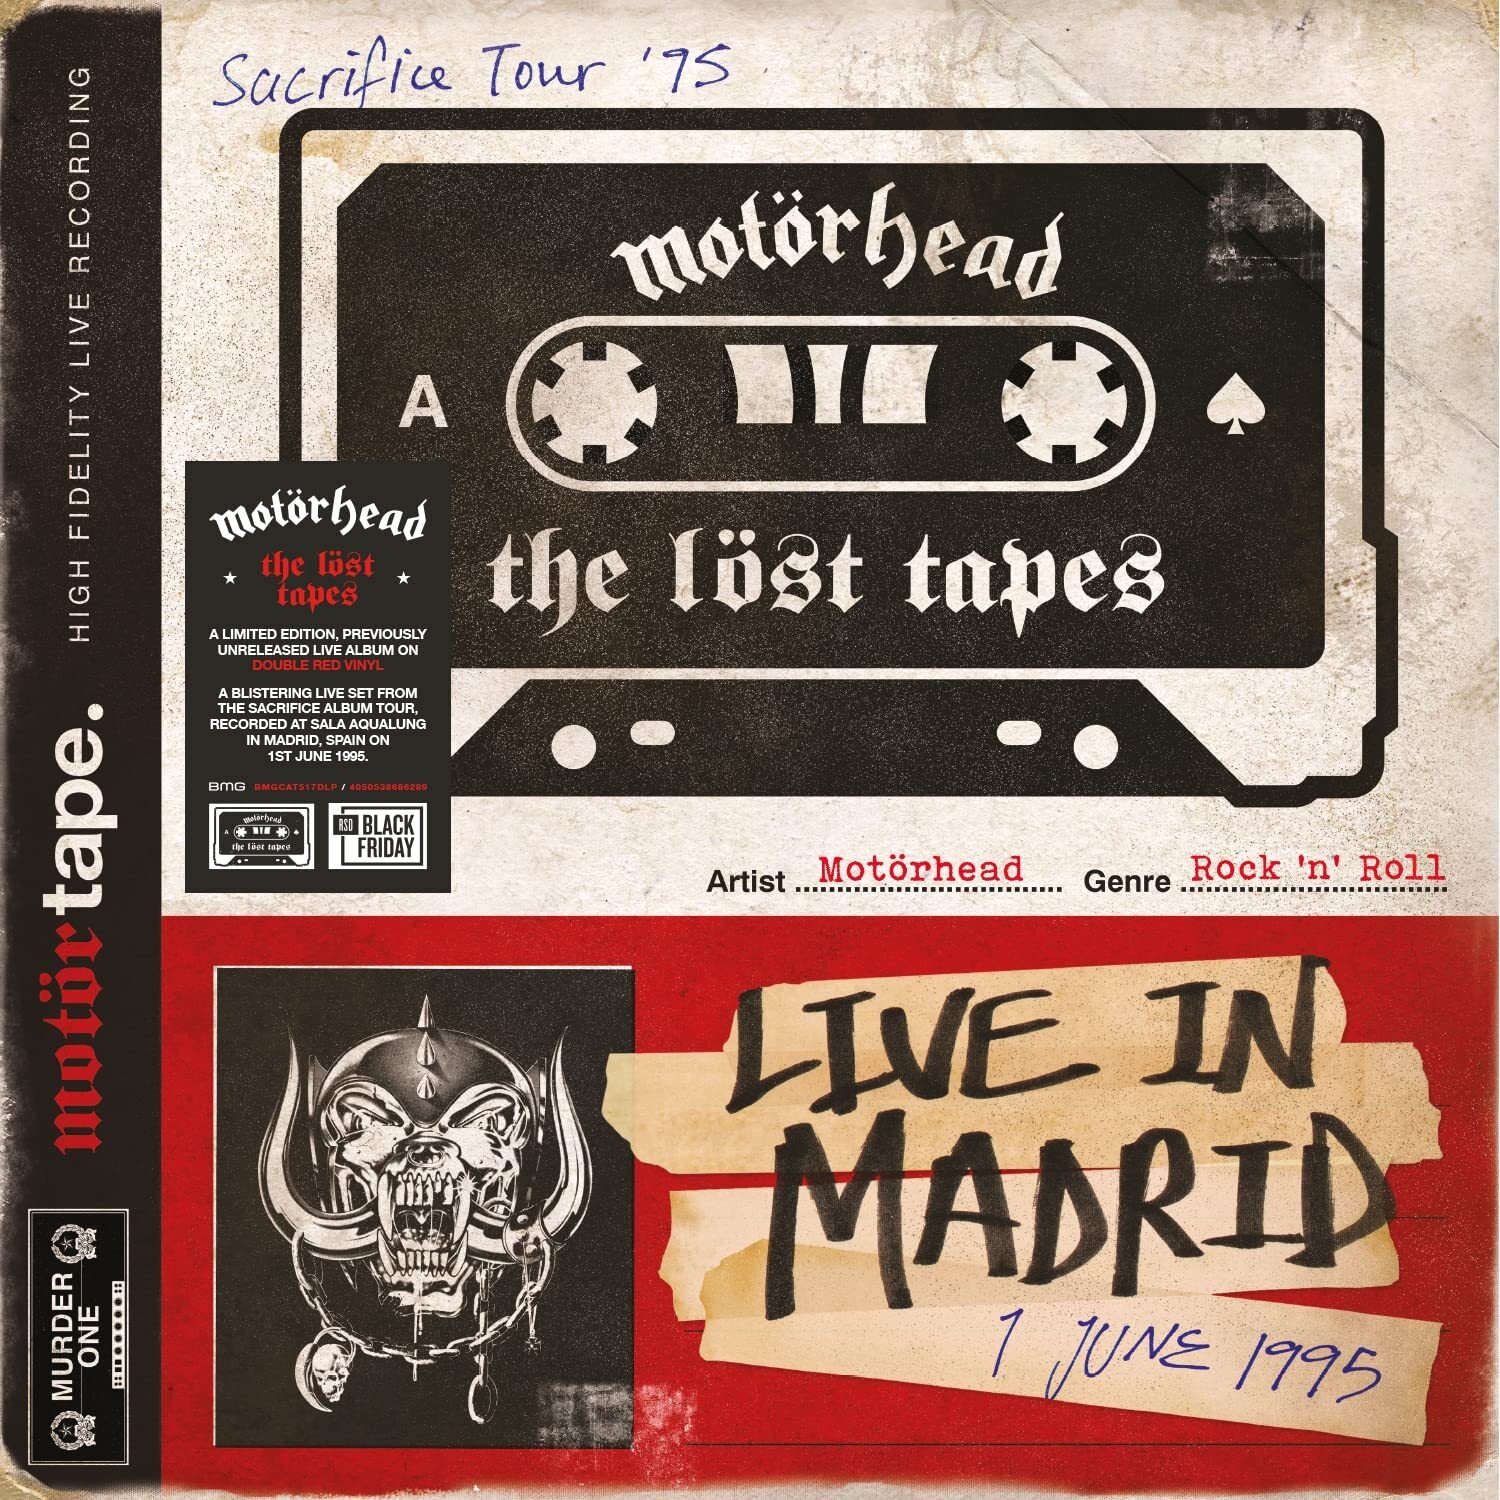 Виниловая Пластинка Motorhead The Lost Tapes Vol. 1 (Live In Madrid 1 June 1995) (4050538686289) motorhead виниловая пластинка motorhead lost tapes vol 1 live in madrid 1 june 1995